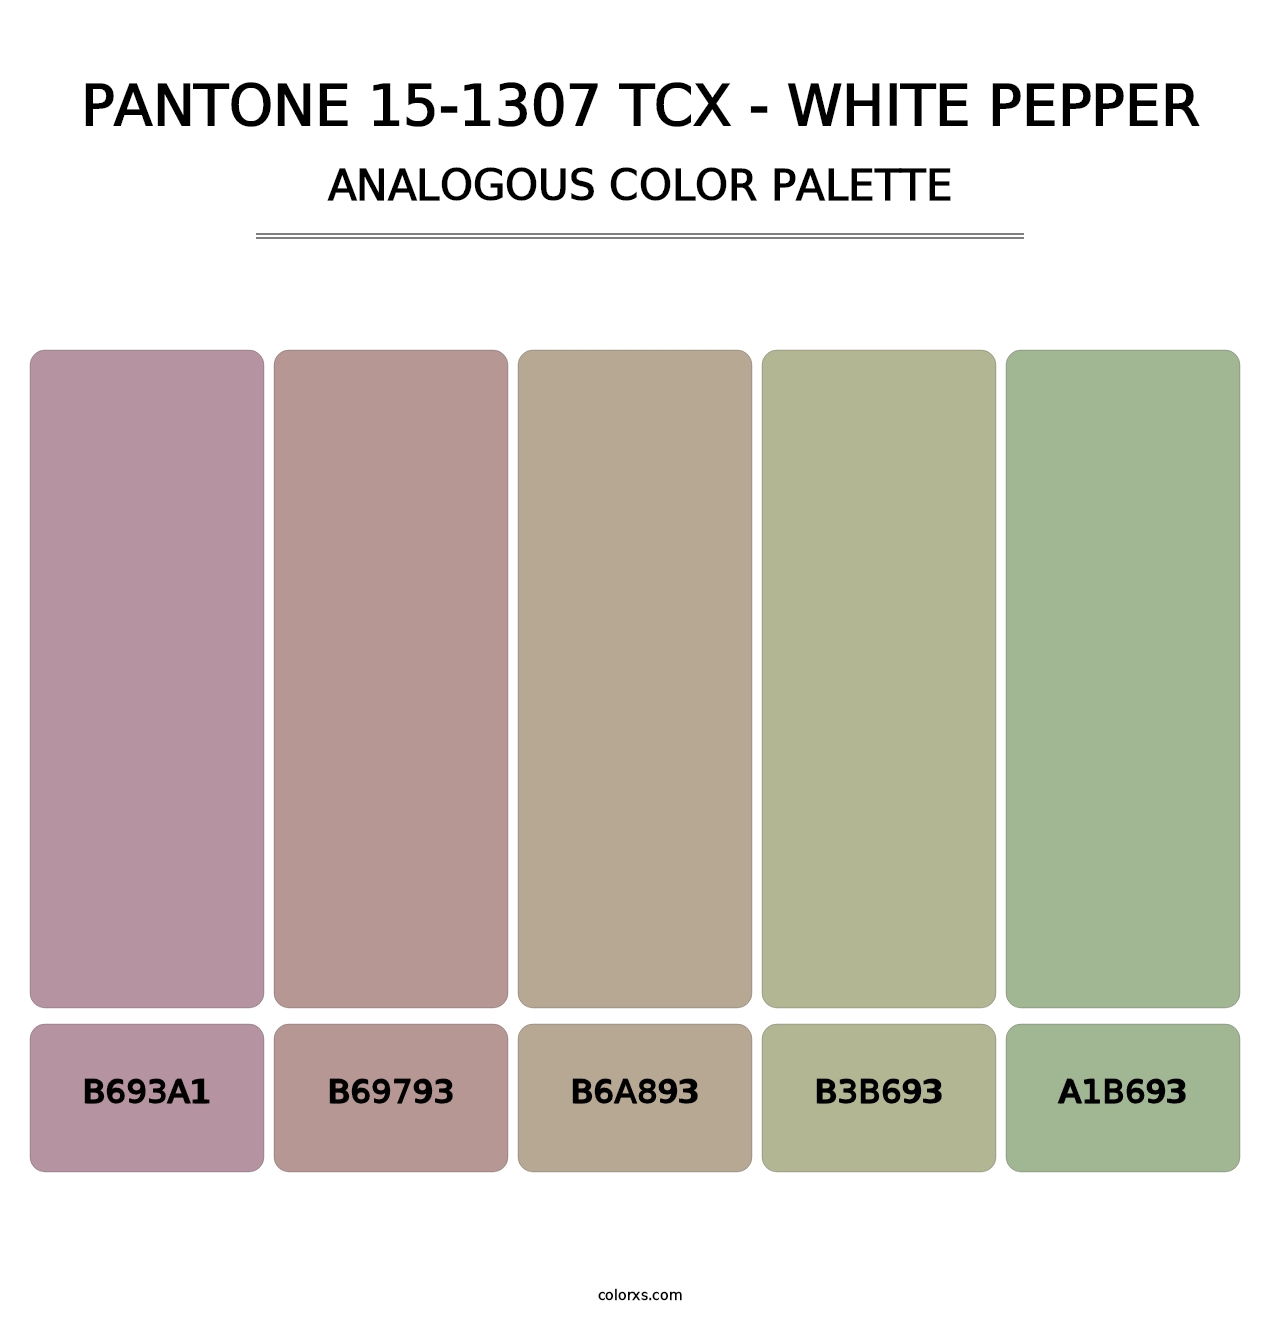 PANTONE 15-1307 TCX - White Pepper - Analogous Color Palette